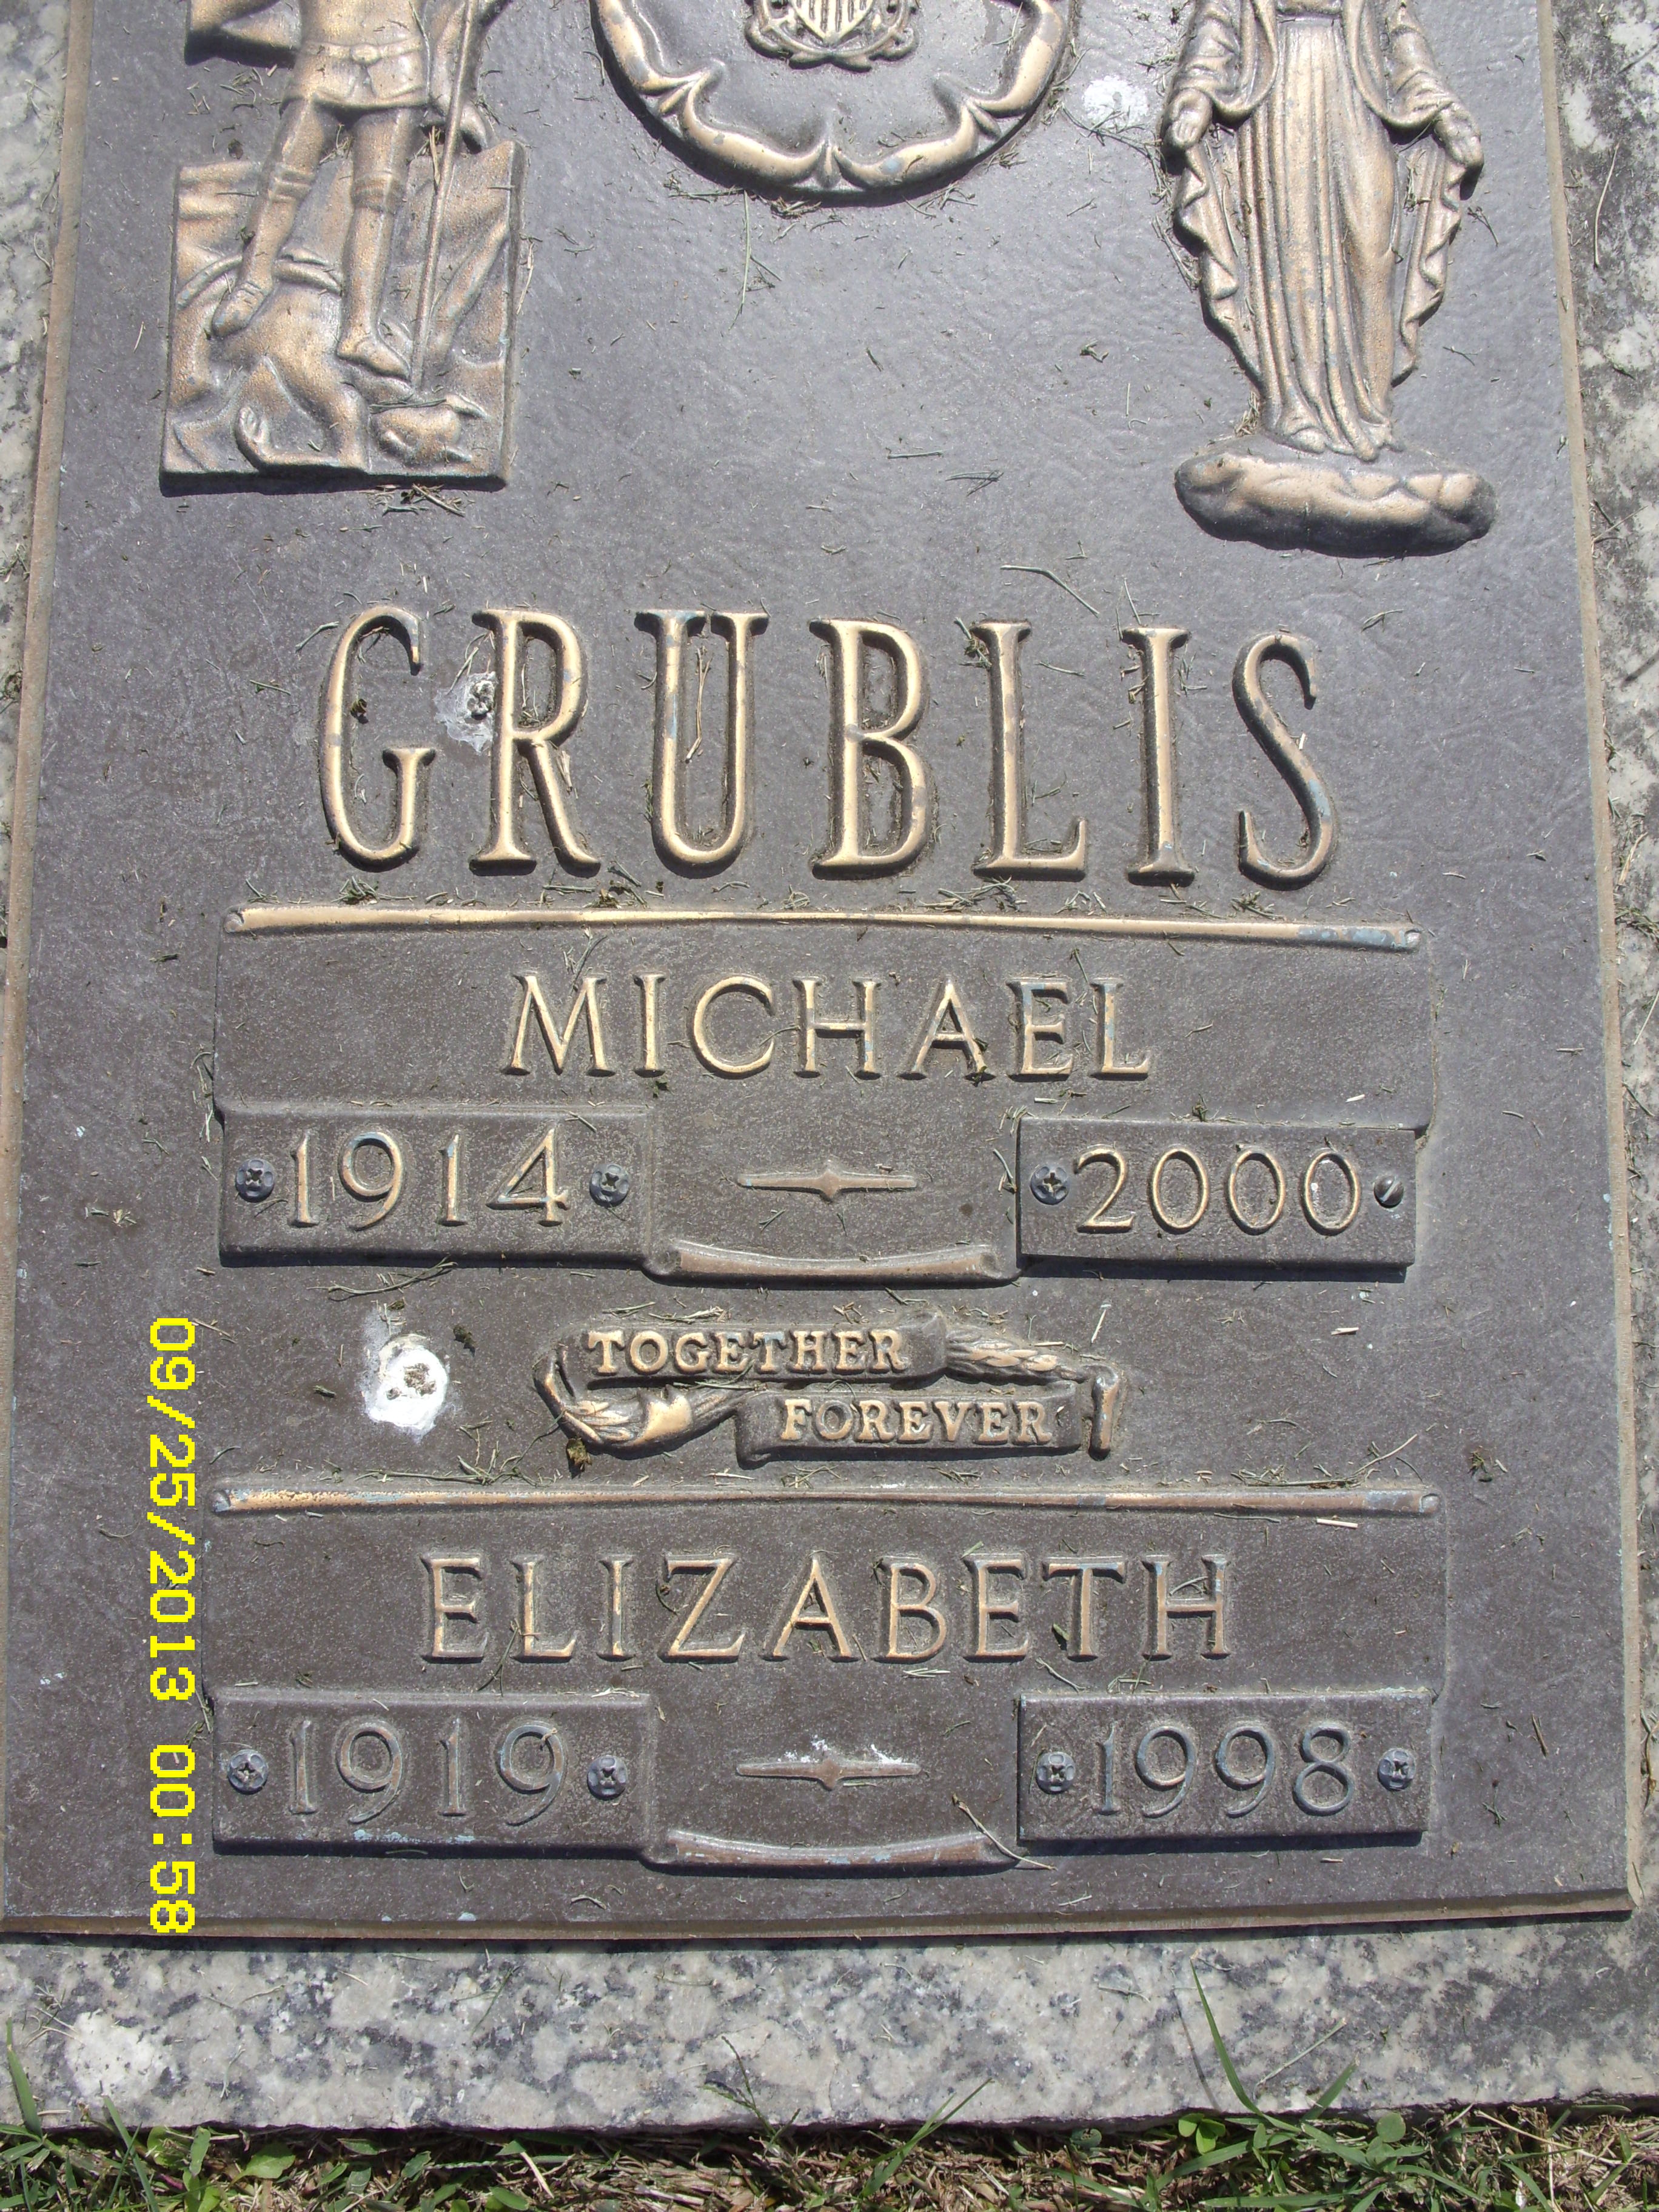 Elizabeth and Michael Grublis gravesite